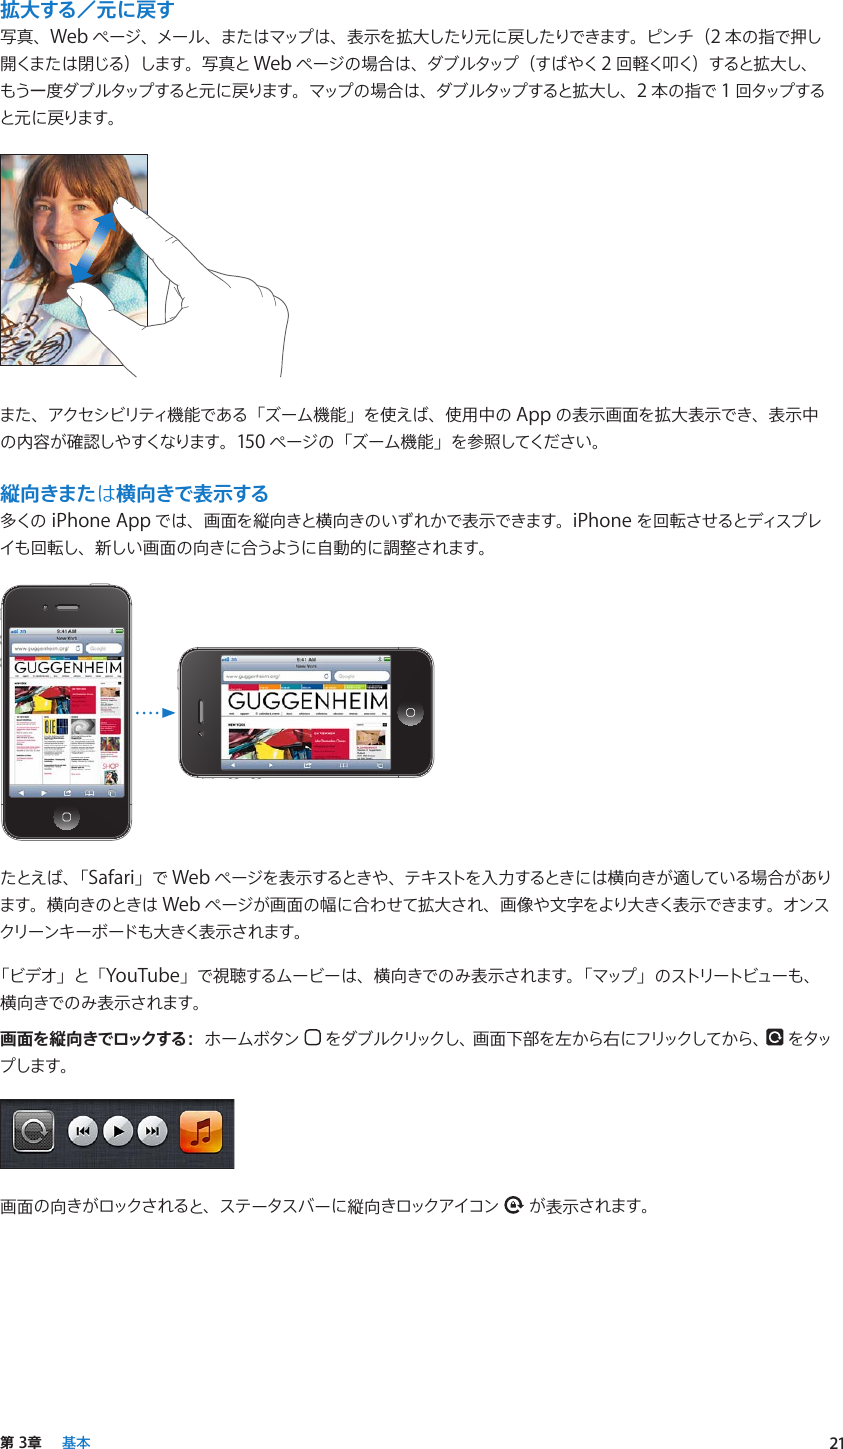 Apple Iphone 3gs ユーザガイド User Manual I Phone Os 5 1 Ios5 Guide J